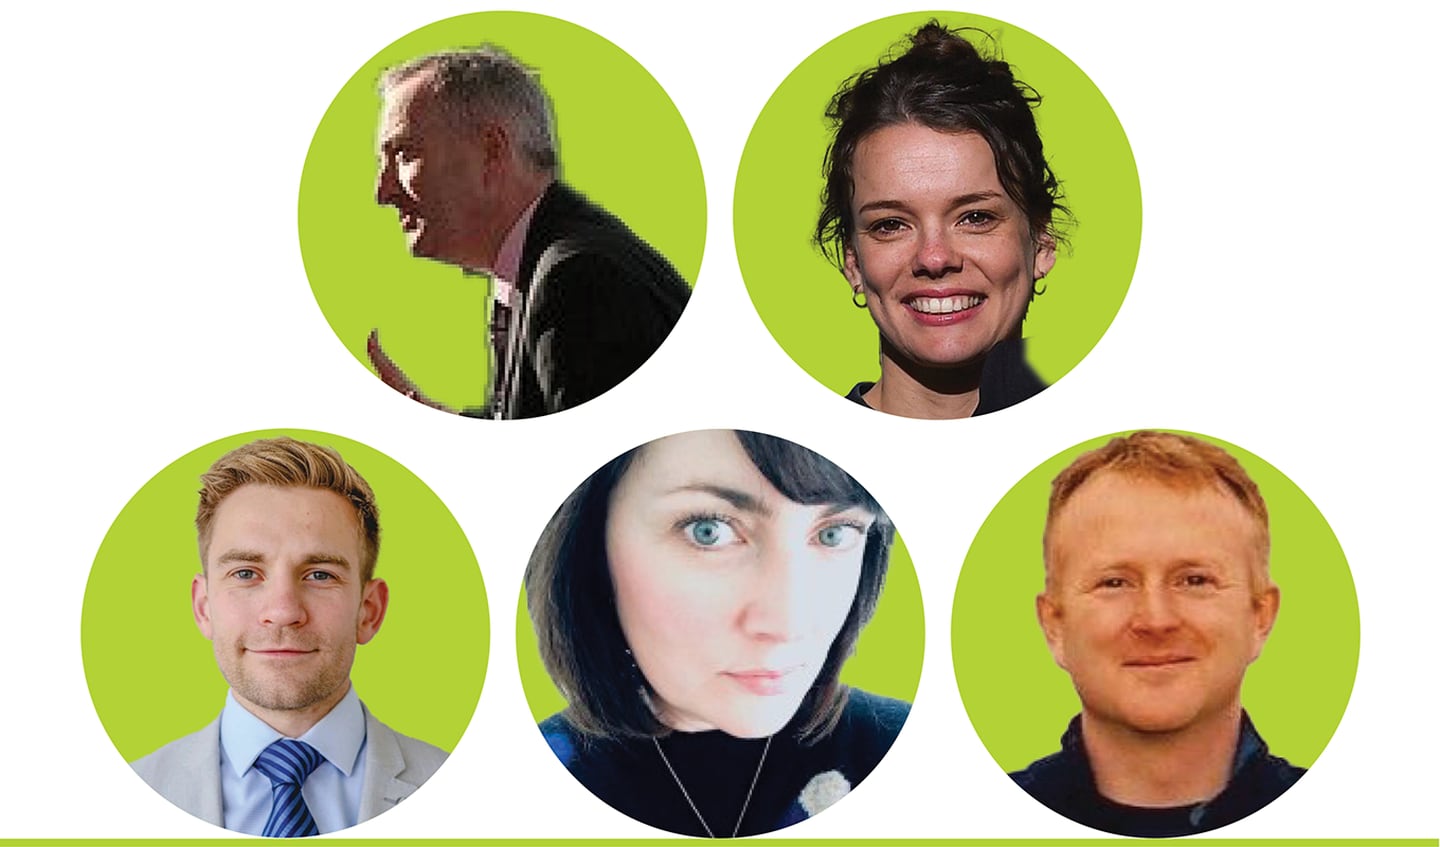 Eamon Ryan GP: Party Leader Advisers:
Top L-R Donall Geoghegan, Anna Conlan 
Bottom L-R Eamonn Fahey, Niamh Allen, David Healy